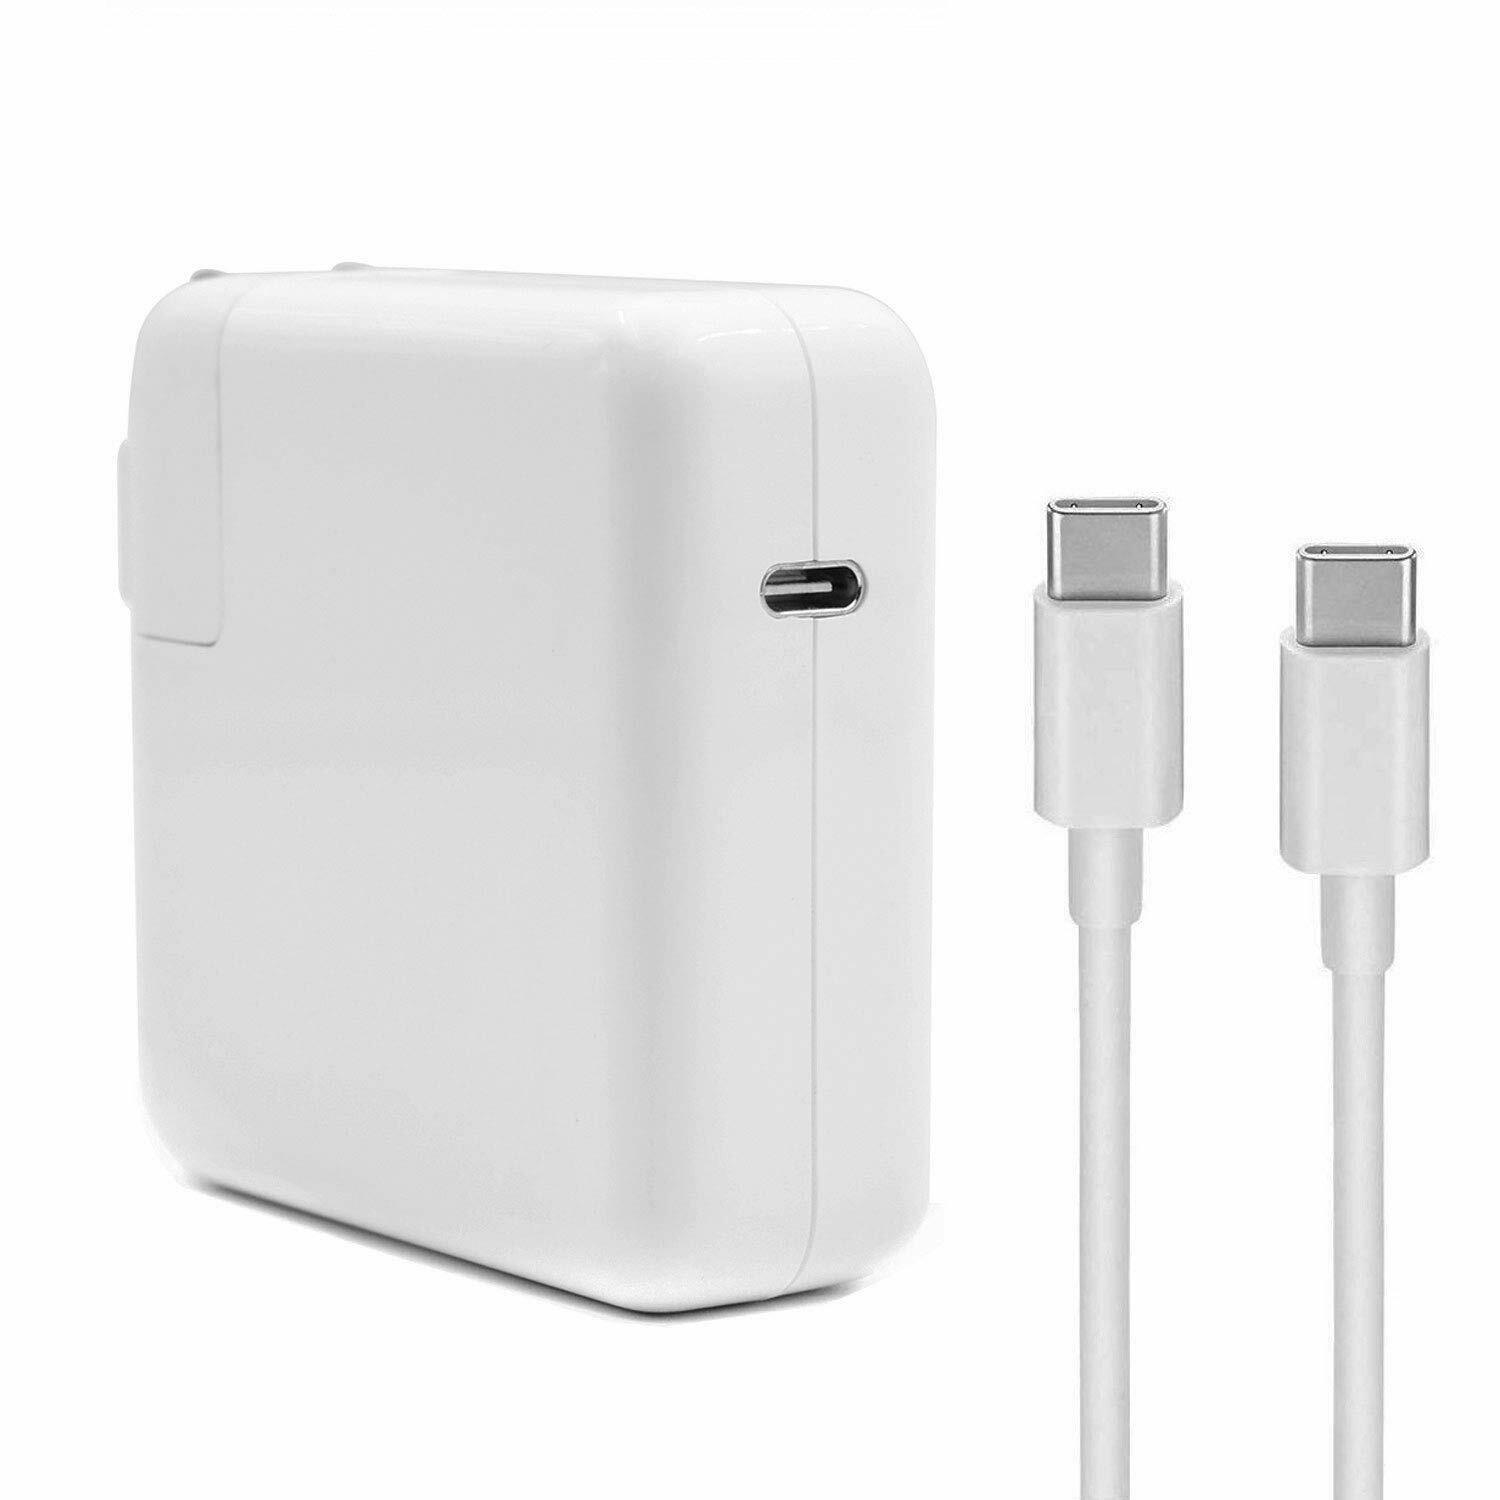 New Original OEM APPLE 15" MacBook Pro with USB-C Port 87W Charger + Cable A1719 Bundled Items: Detachable Plugs Com